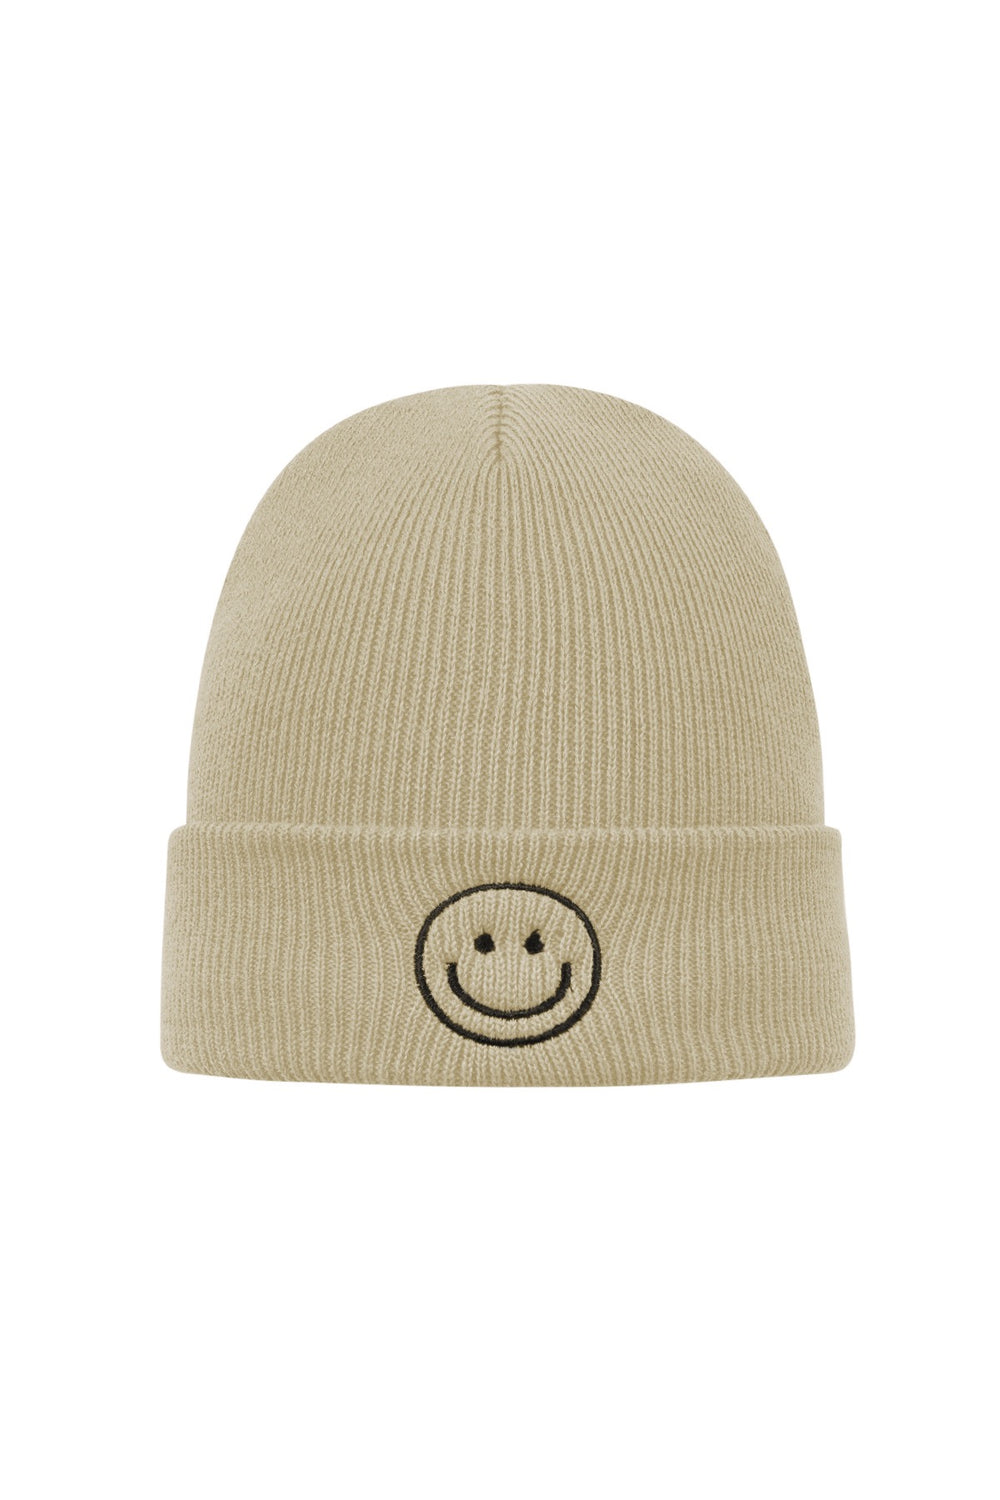 Happy Mütze mit Smiley 😊